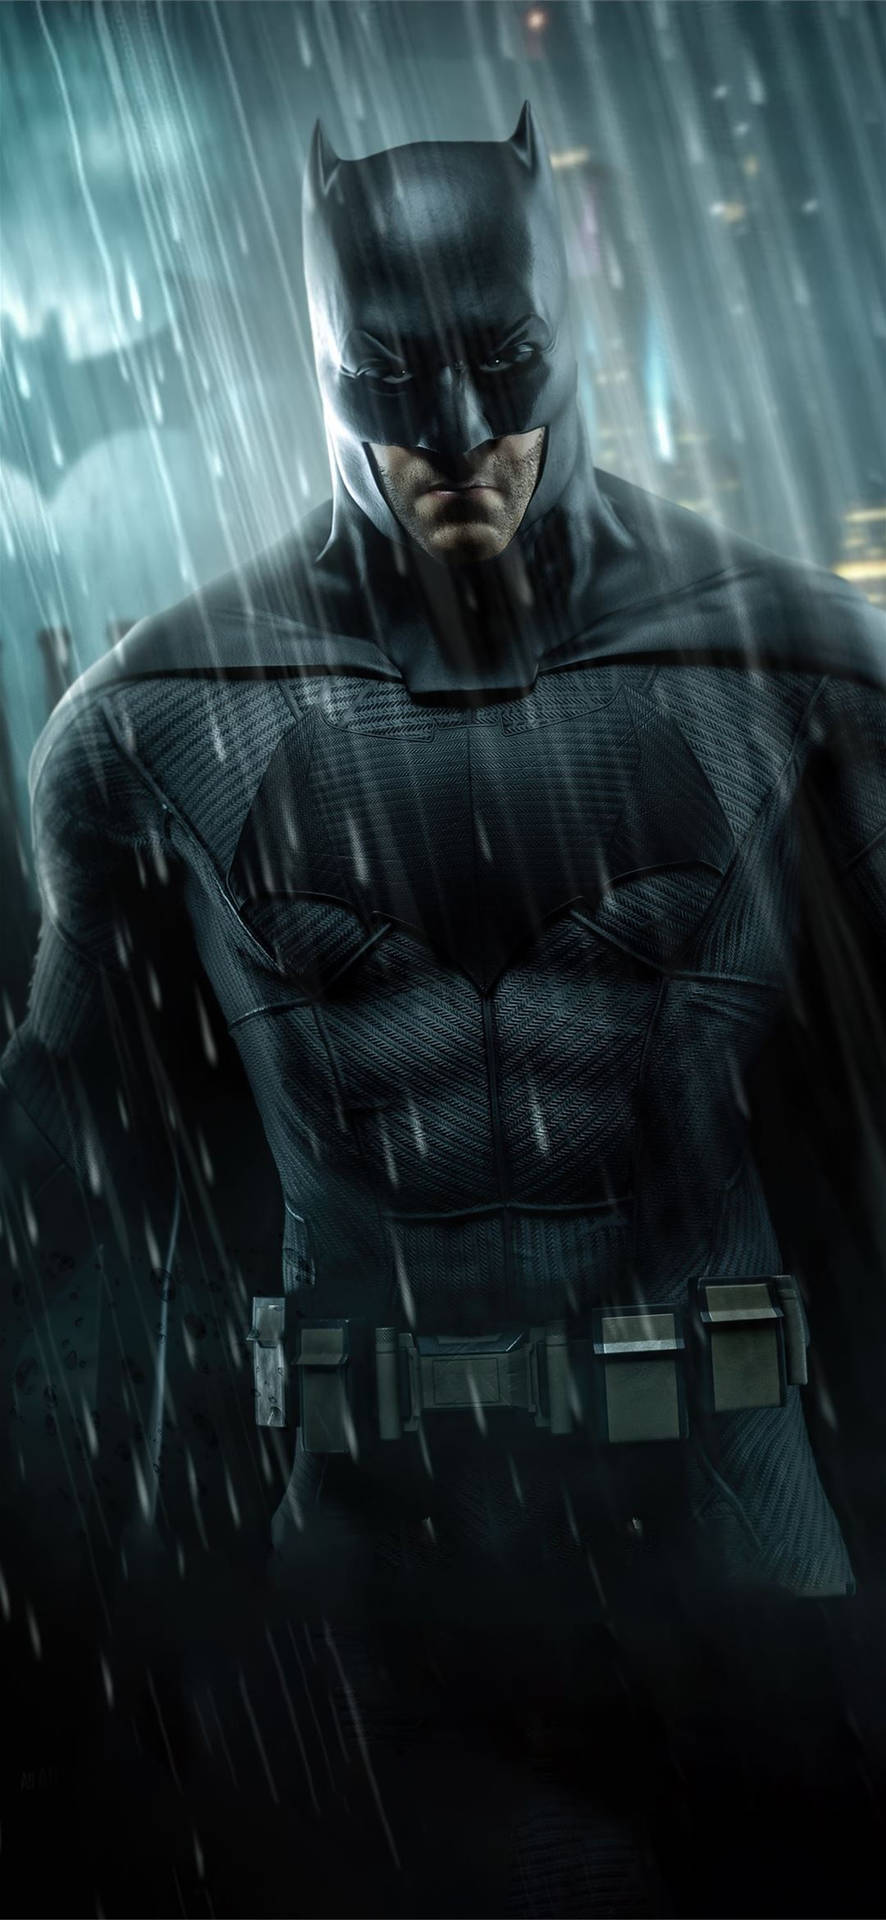 Rainy The Batman Iphone Wallpaper